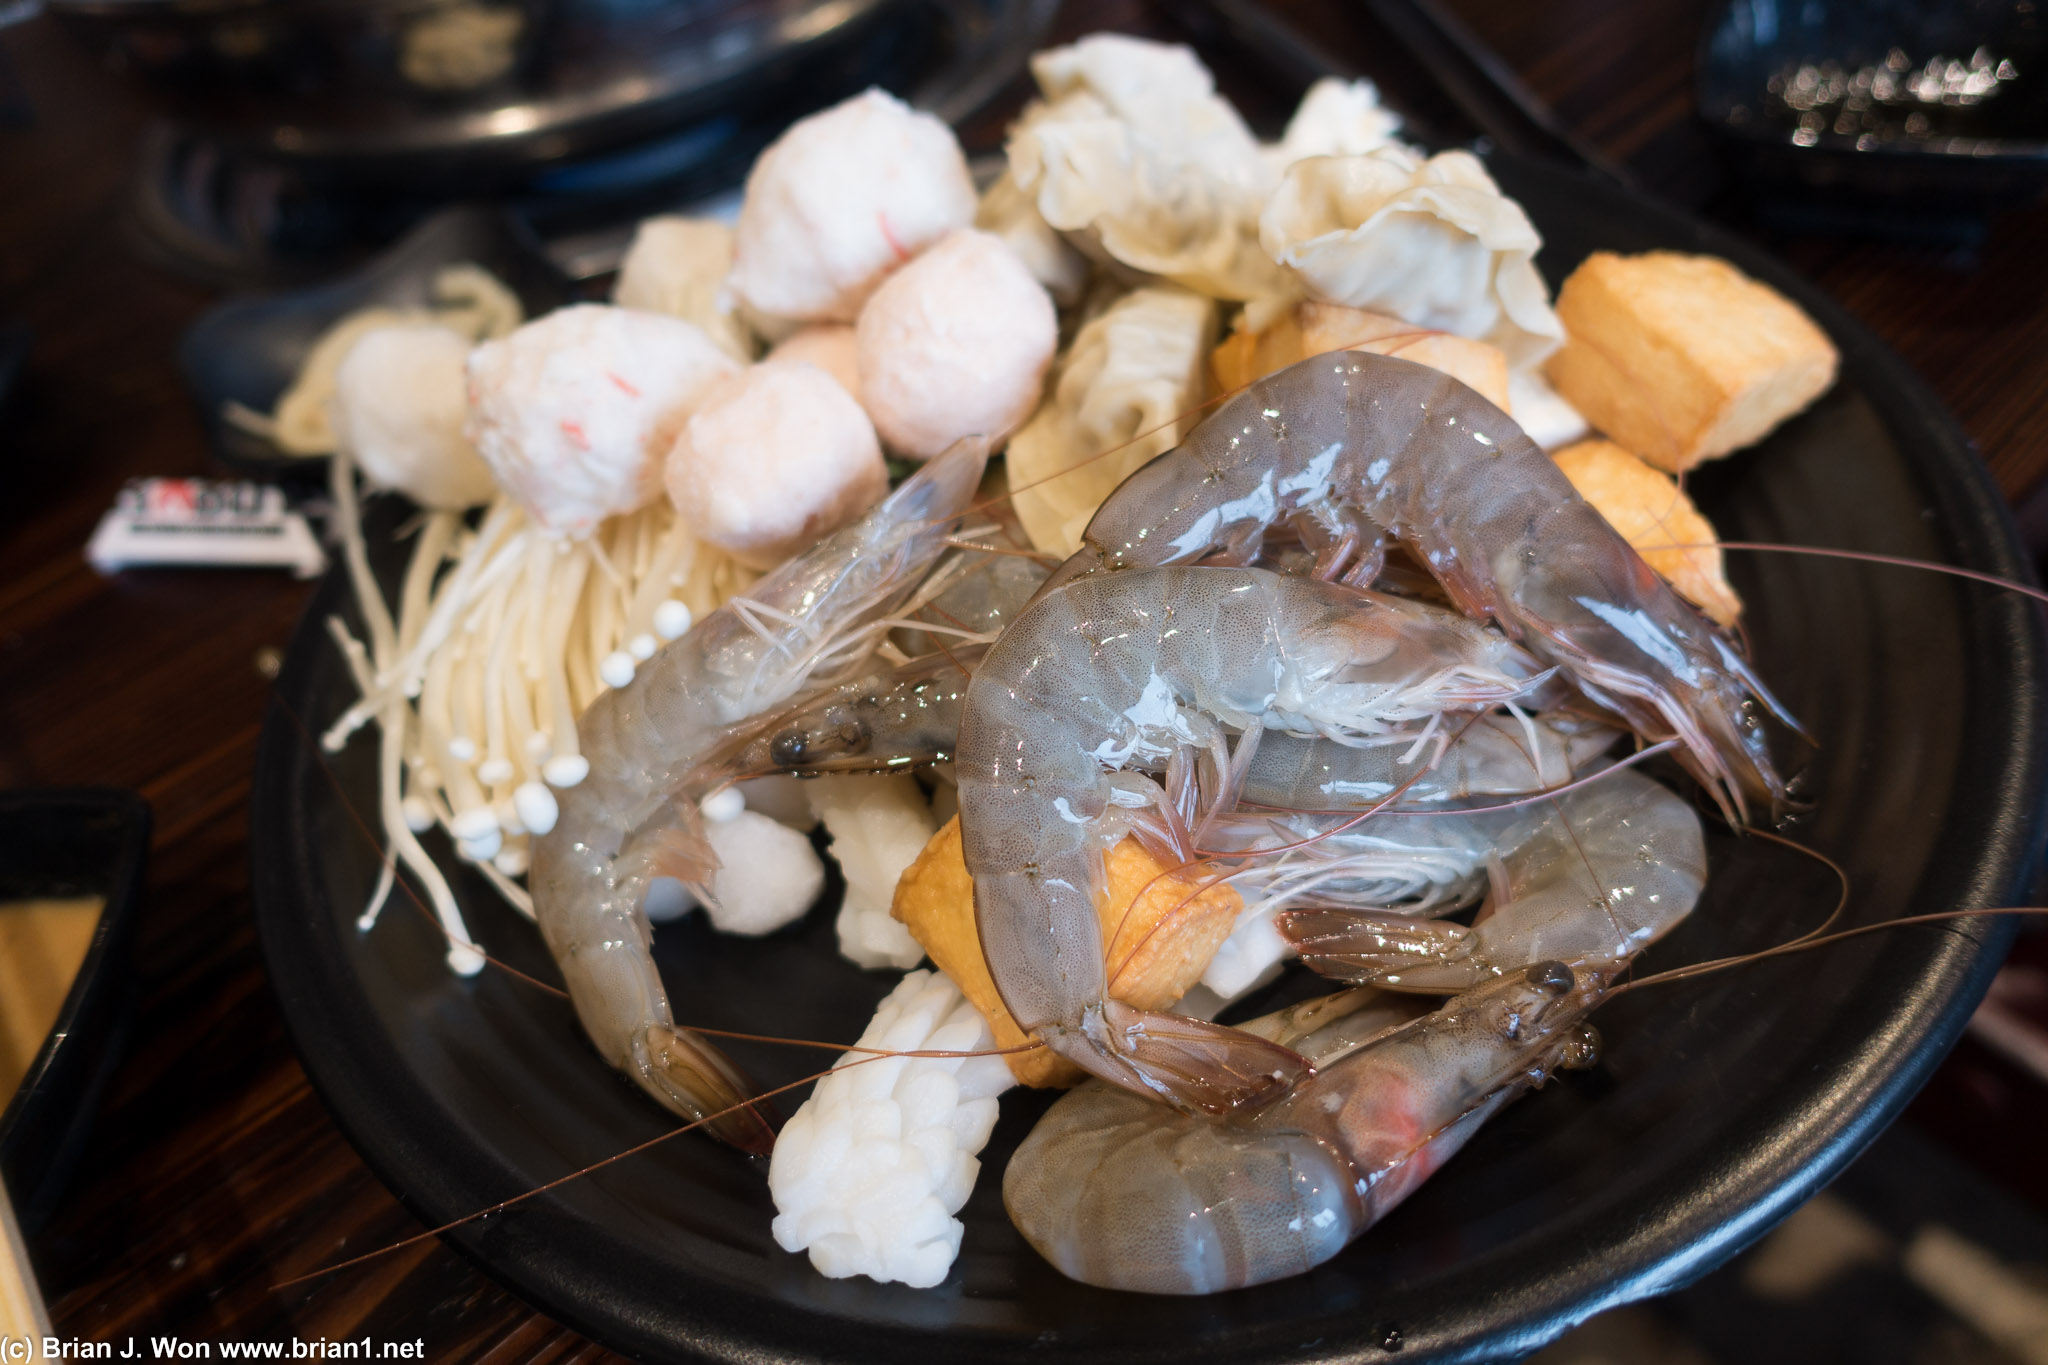 From the salad bar: shrimp, fish balls, mushrooms, tofu, and squid.